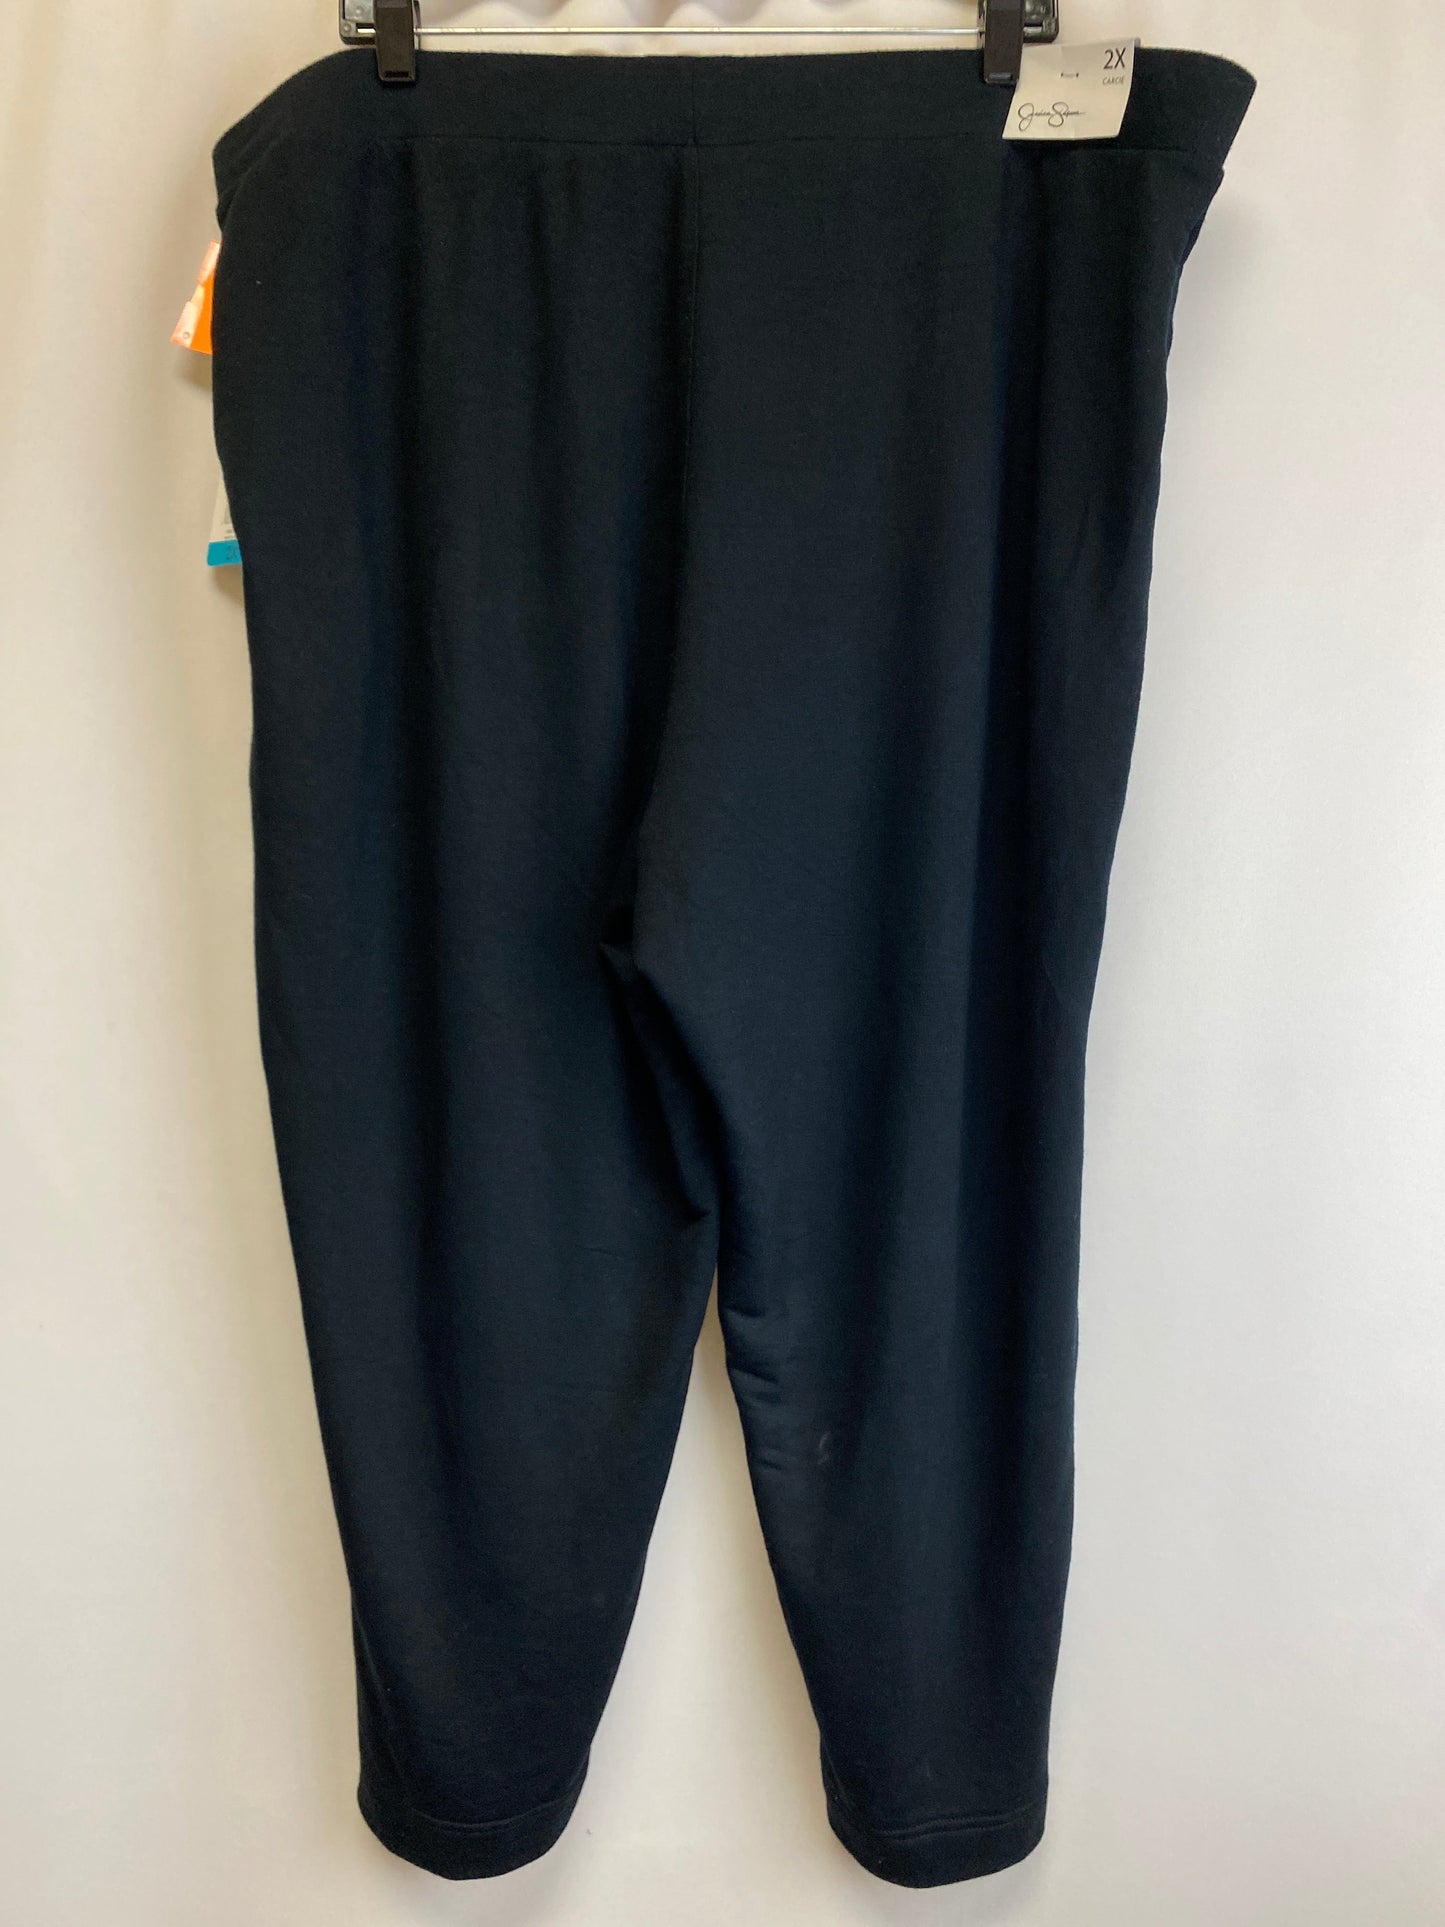 Pajama Pants By Jessica Simpson  Size: 2x